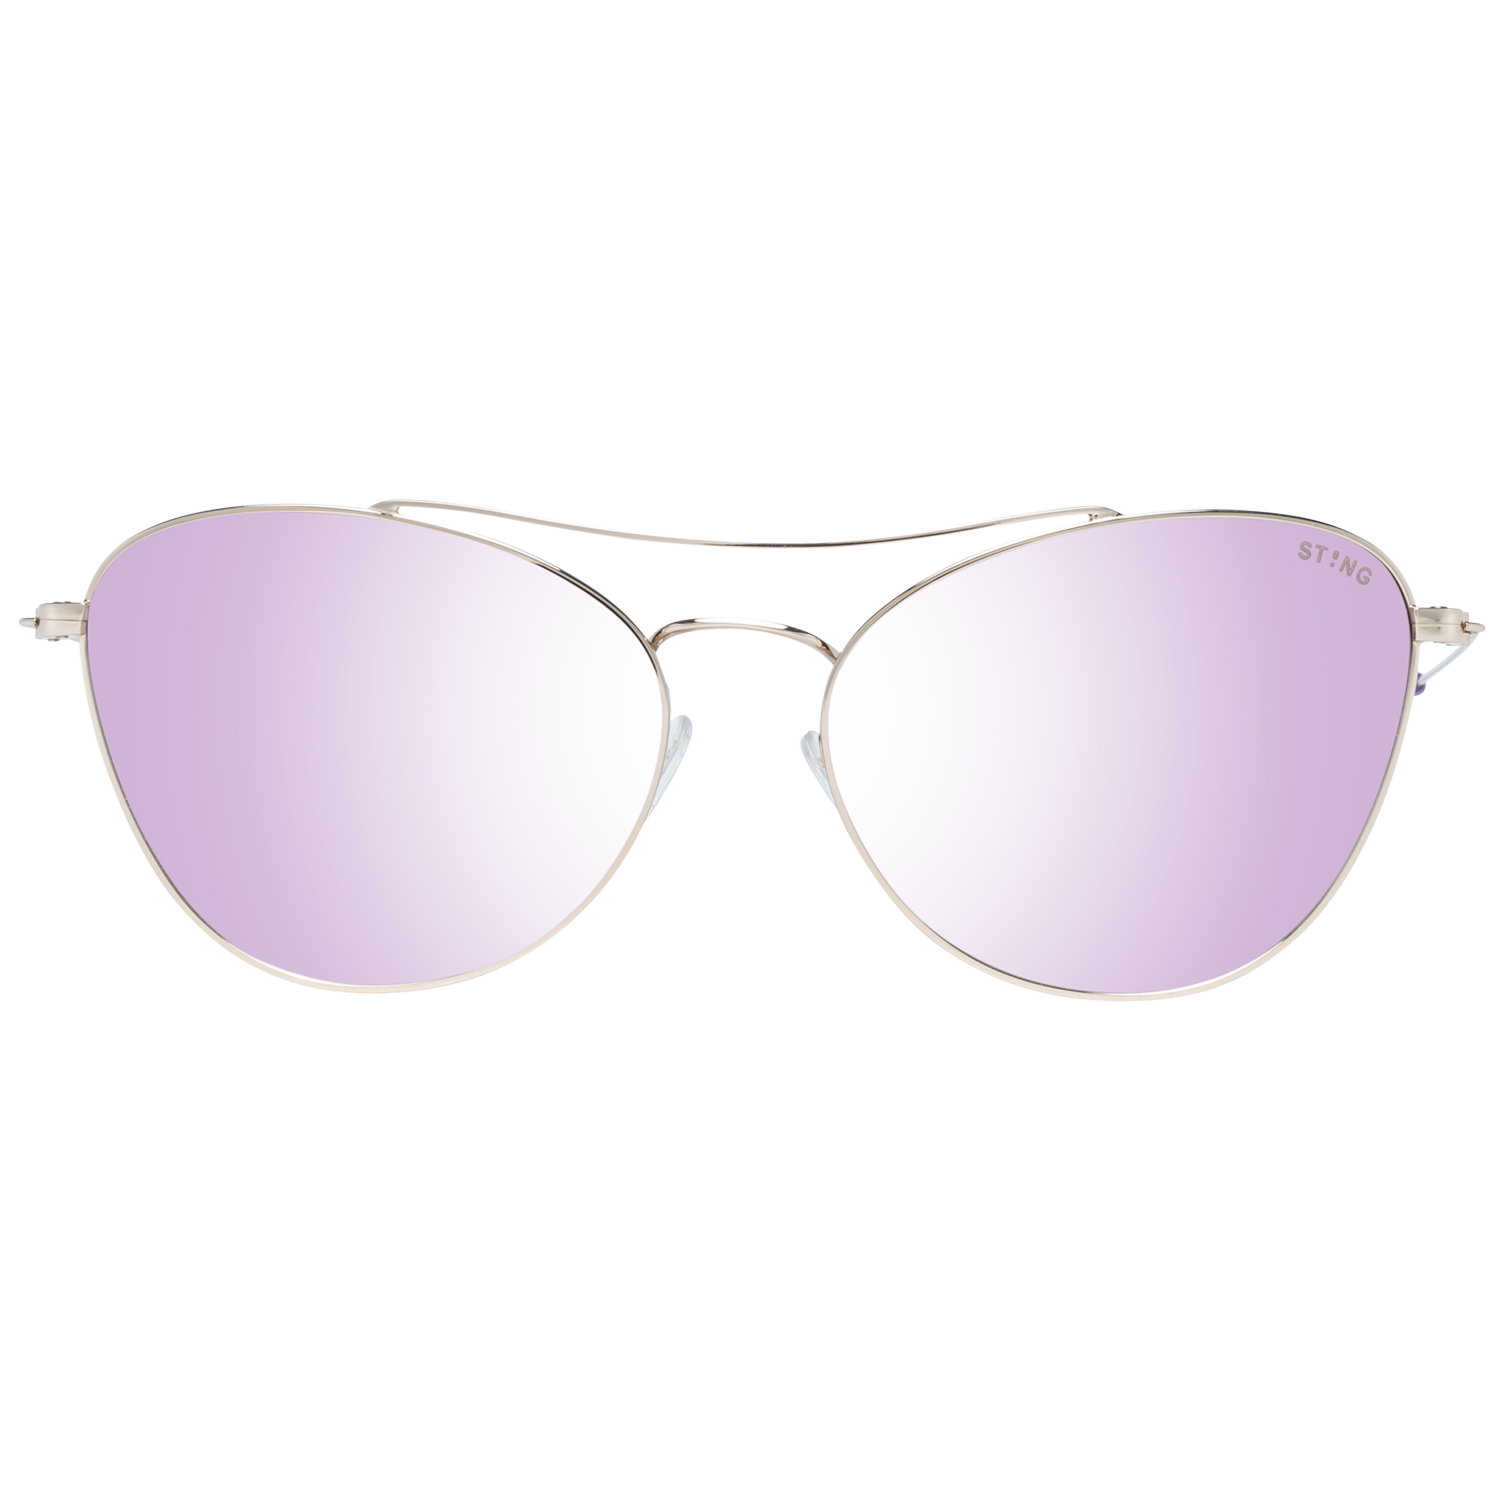 Sting Sunglasses Sting Sunglasses SST218 300X 55 Eyeglasses Eyewear UK USA Australia 